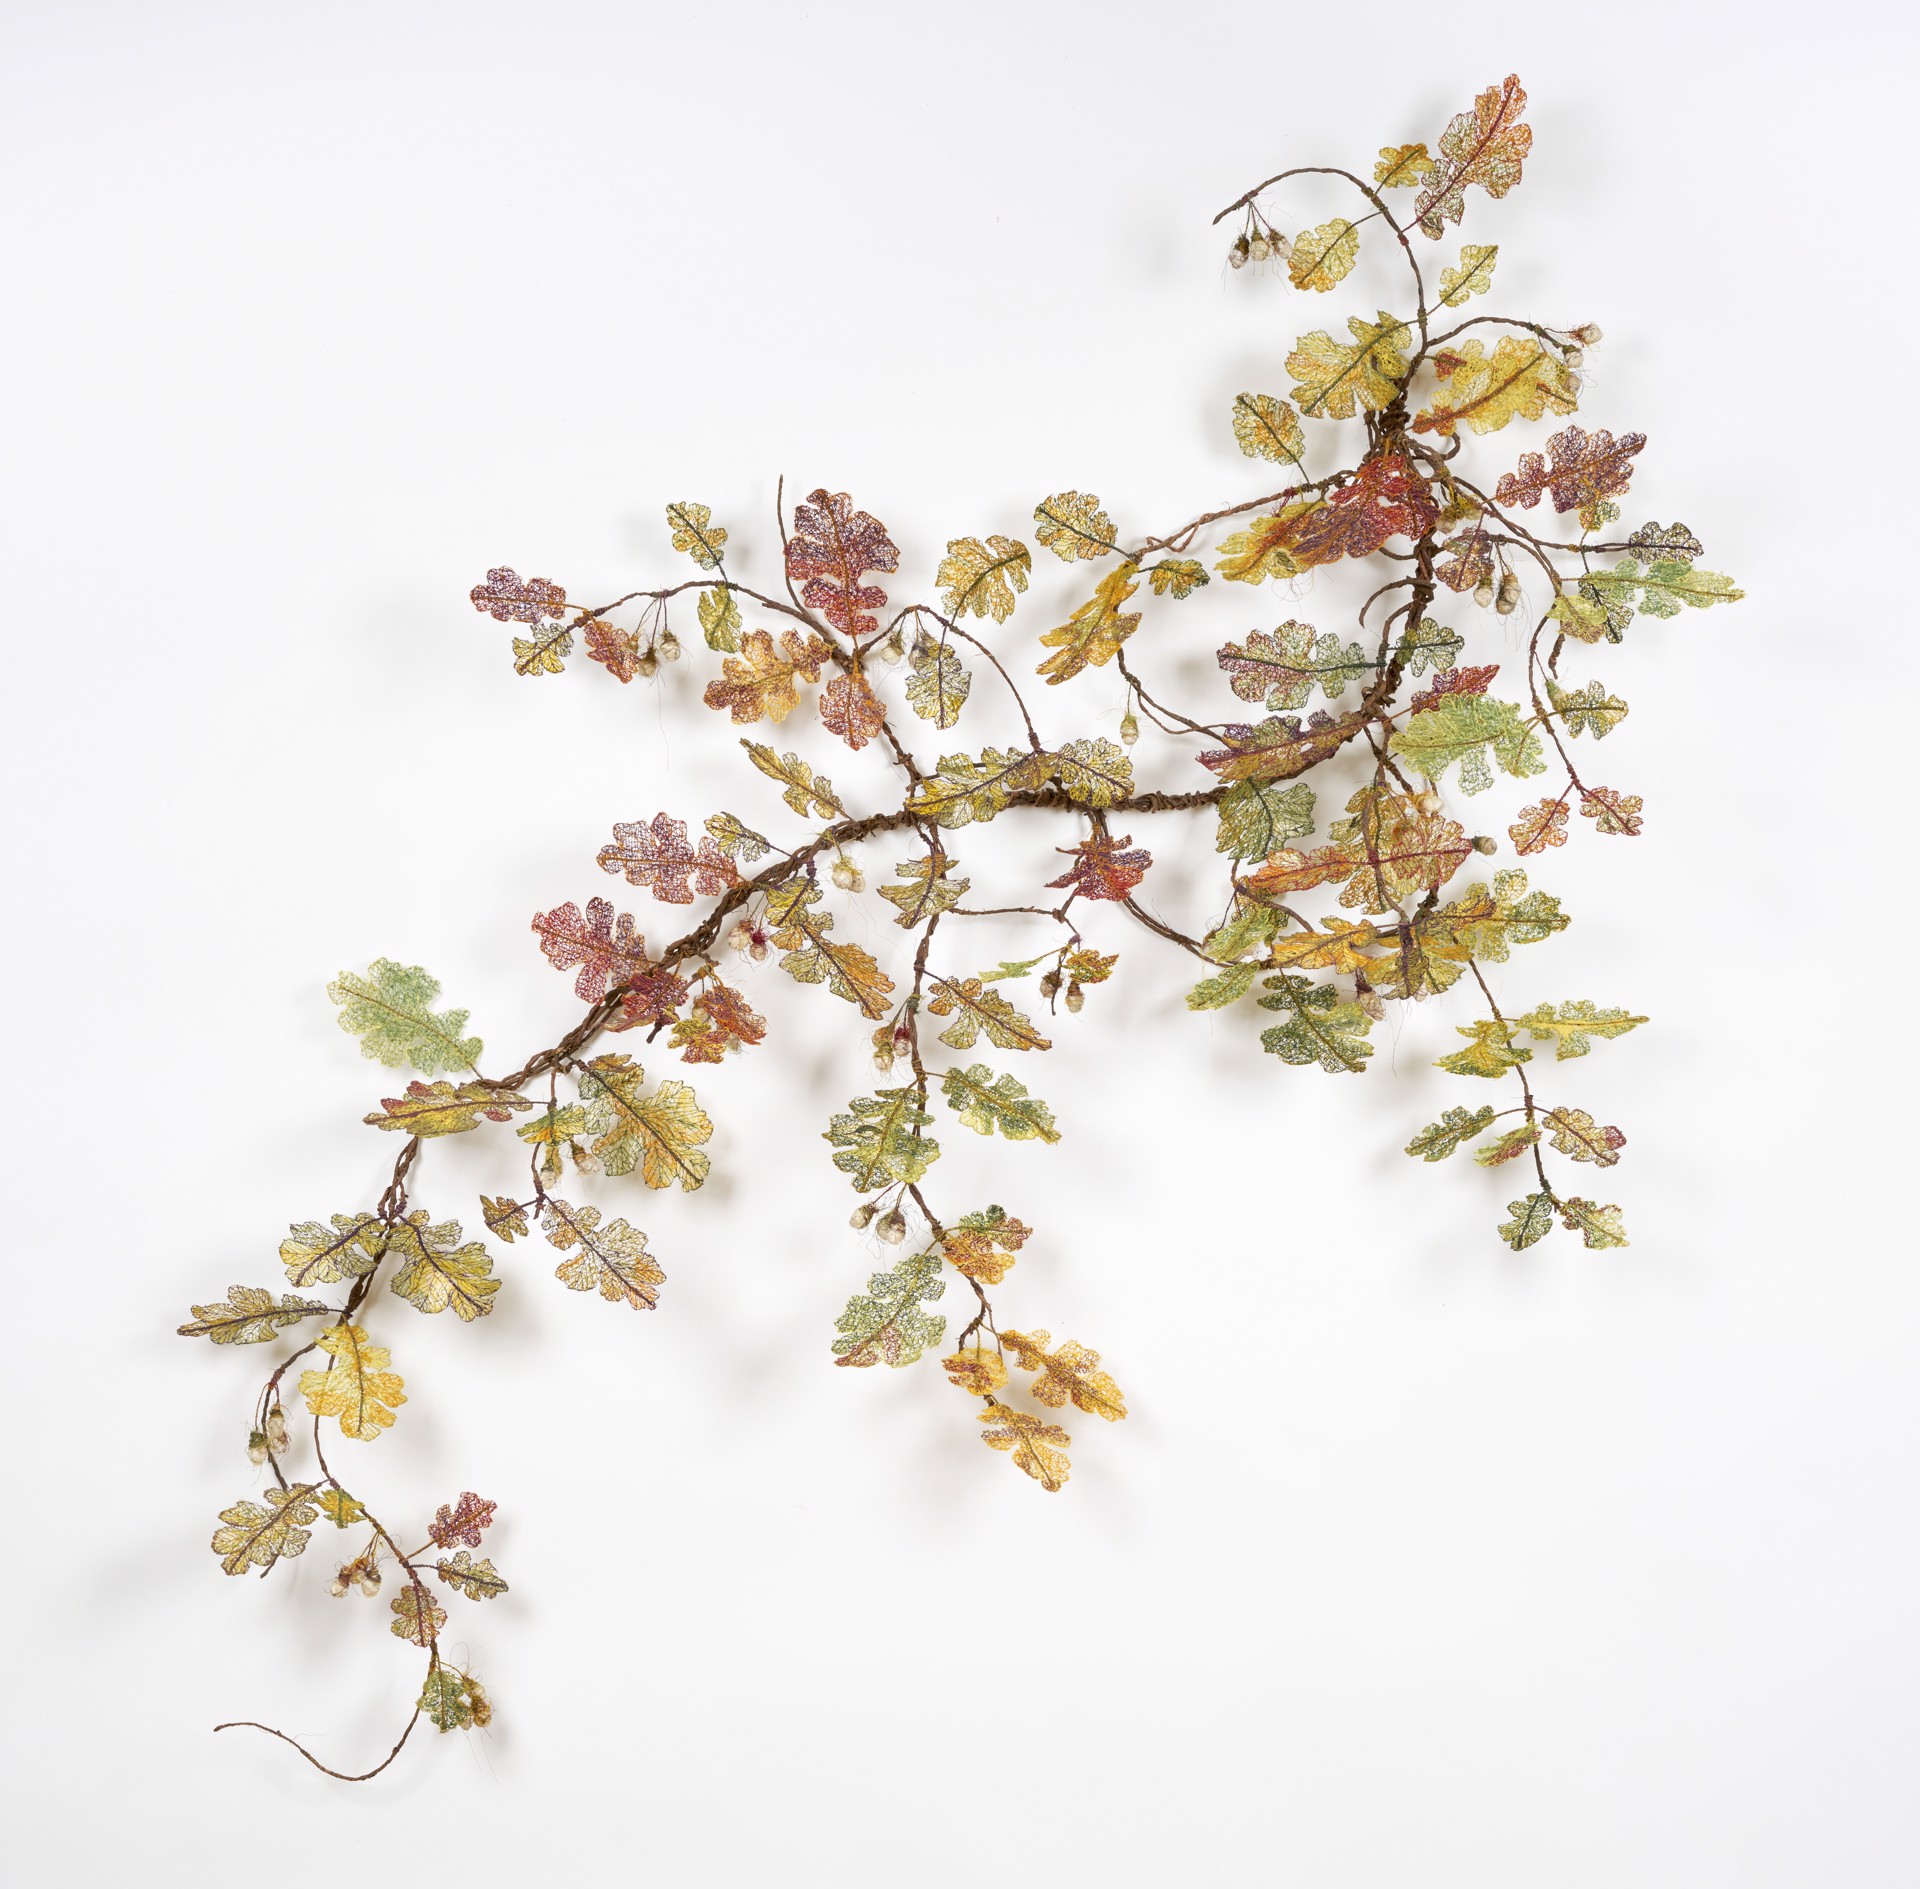 Quercus Alba by Lisa Kokin